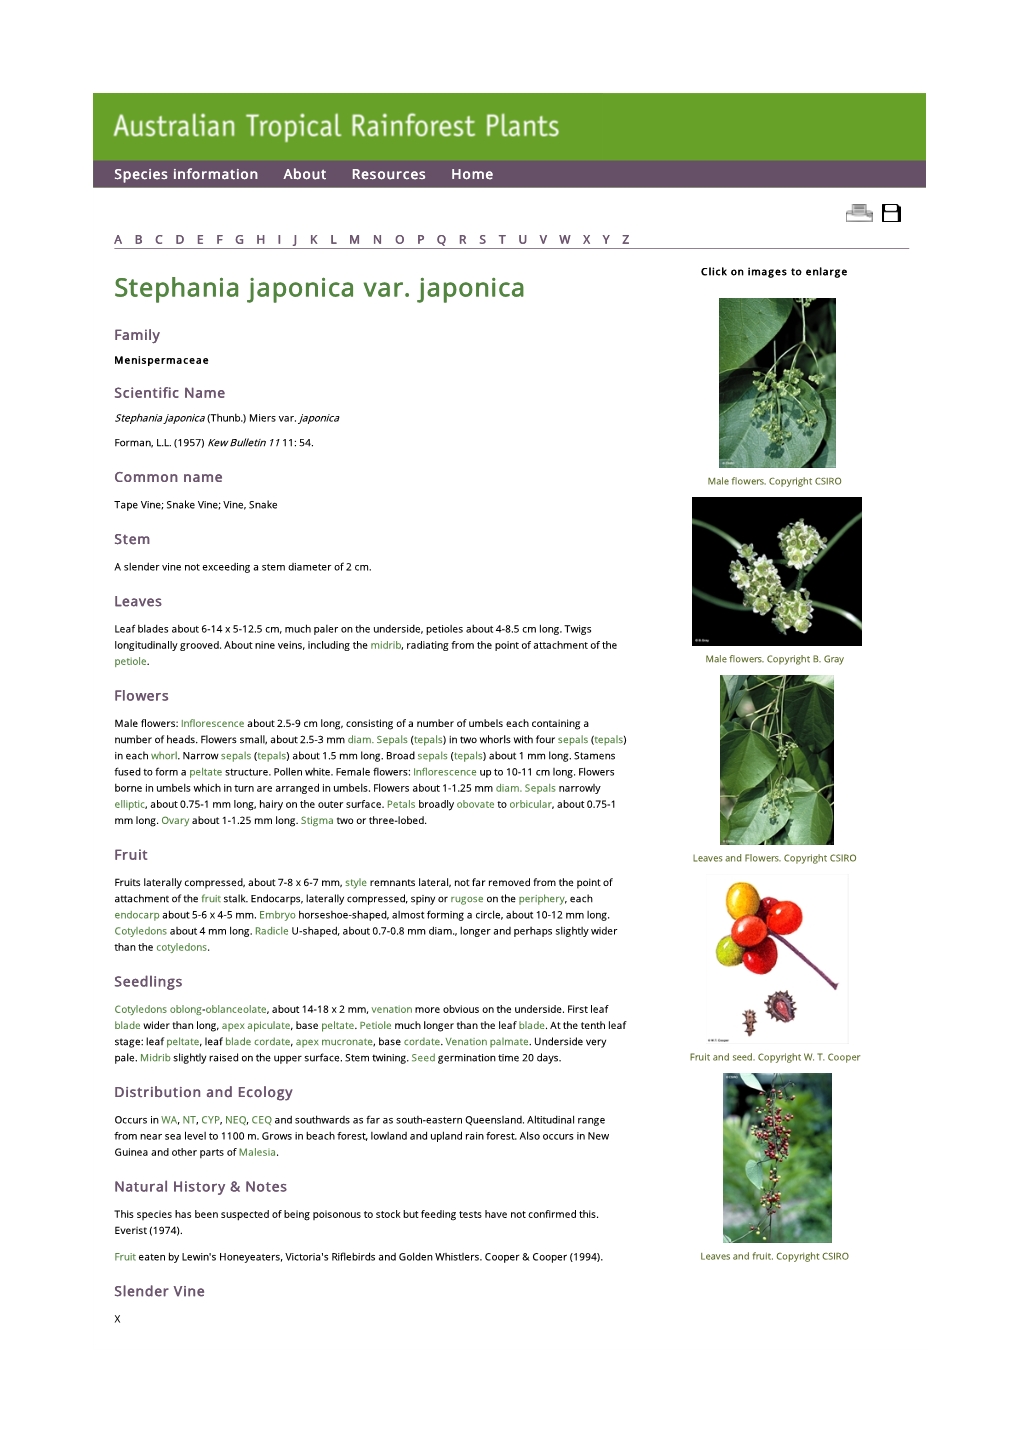 Stephania Japonica Var. Japonica Click on Images to Enlarge